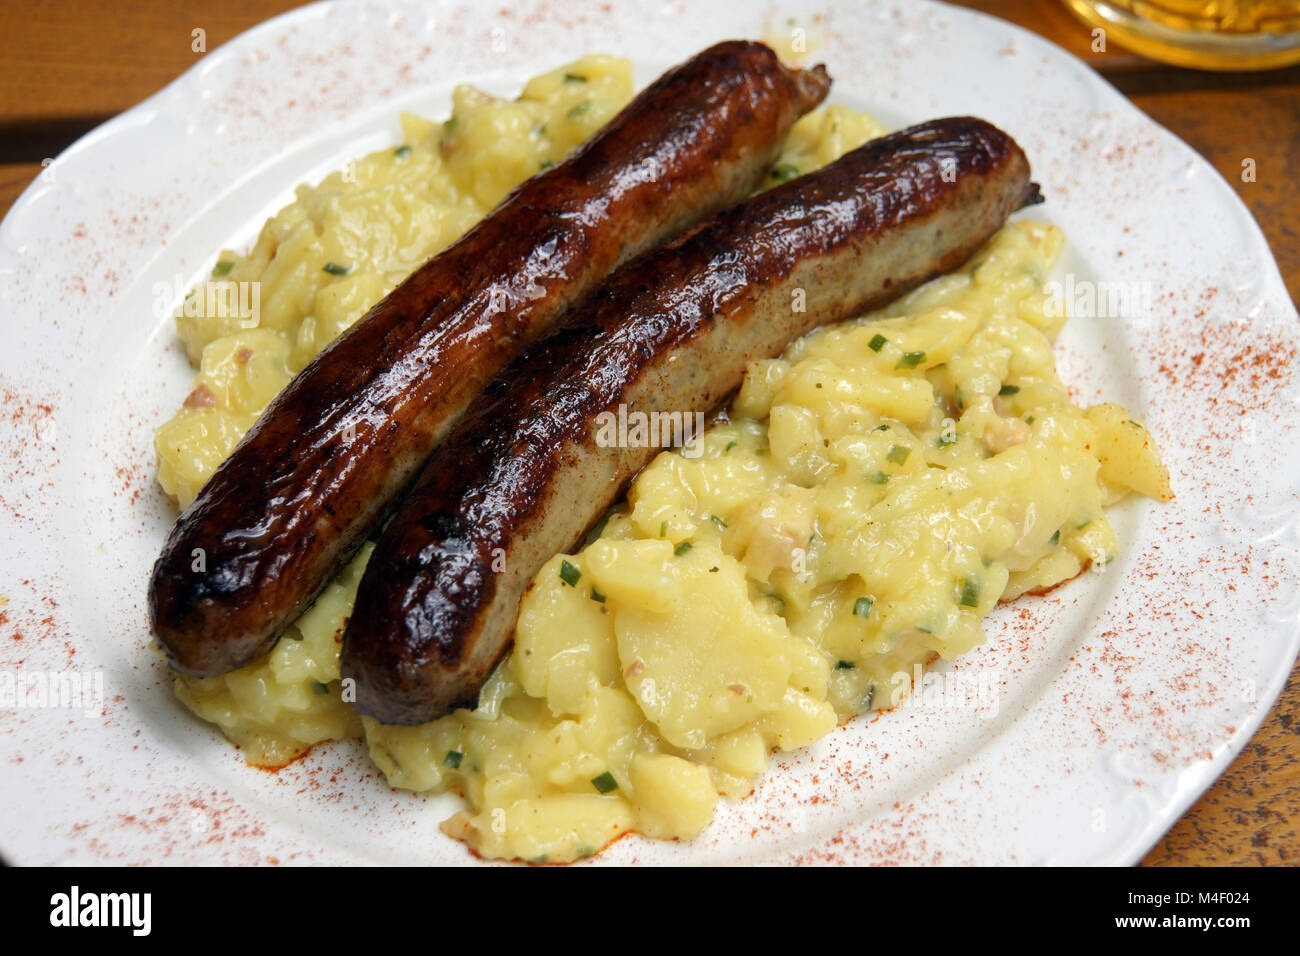 Fränkische Bratwurst mit Kartoffelsalat Stockfotografie - Alamy